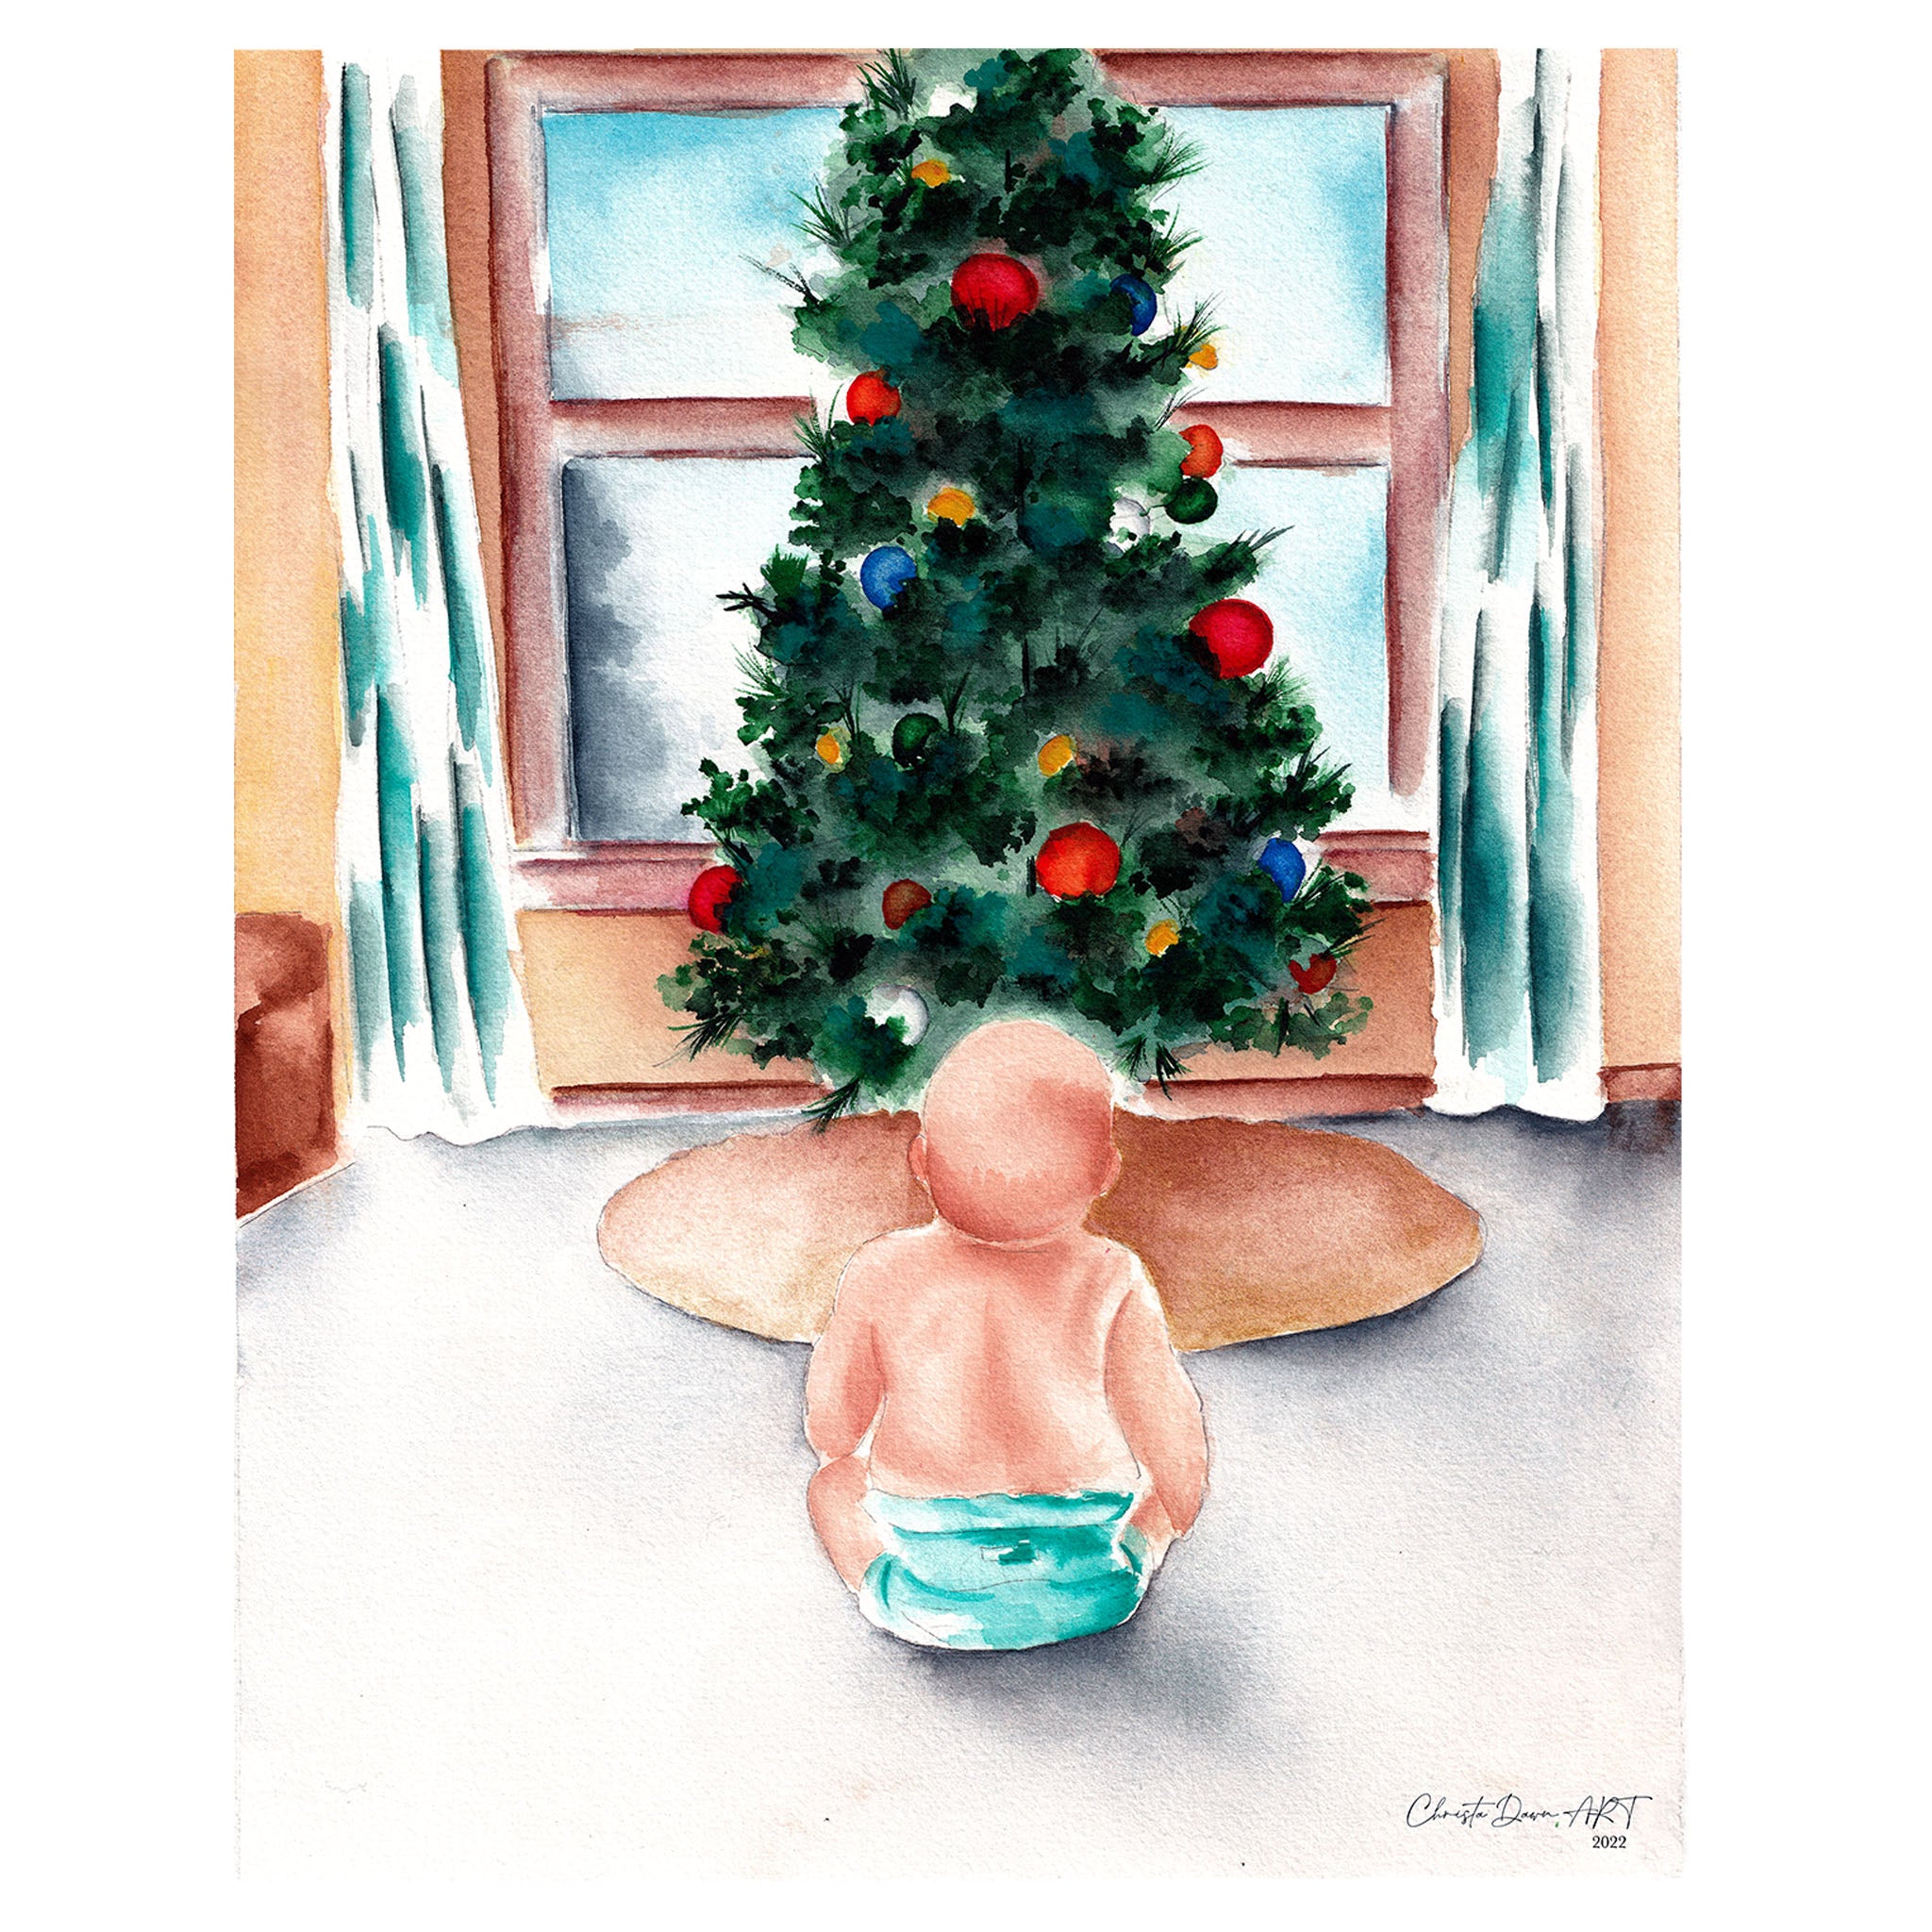 "Wonder" Child at Christmas - Greeting Card Set